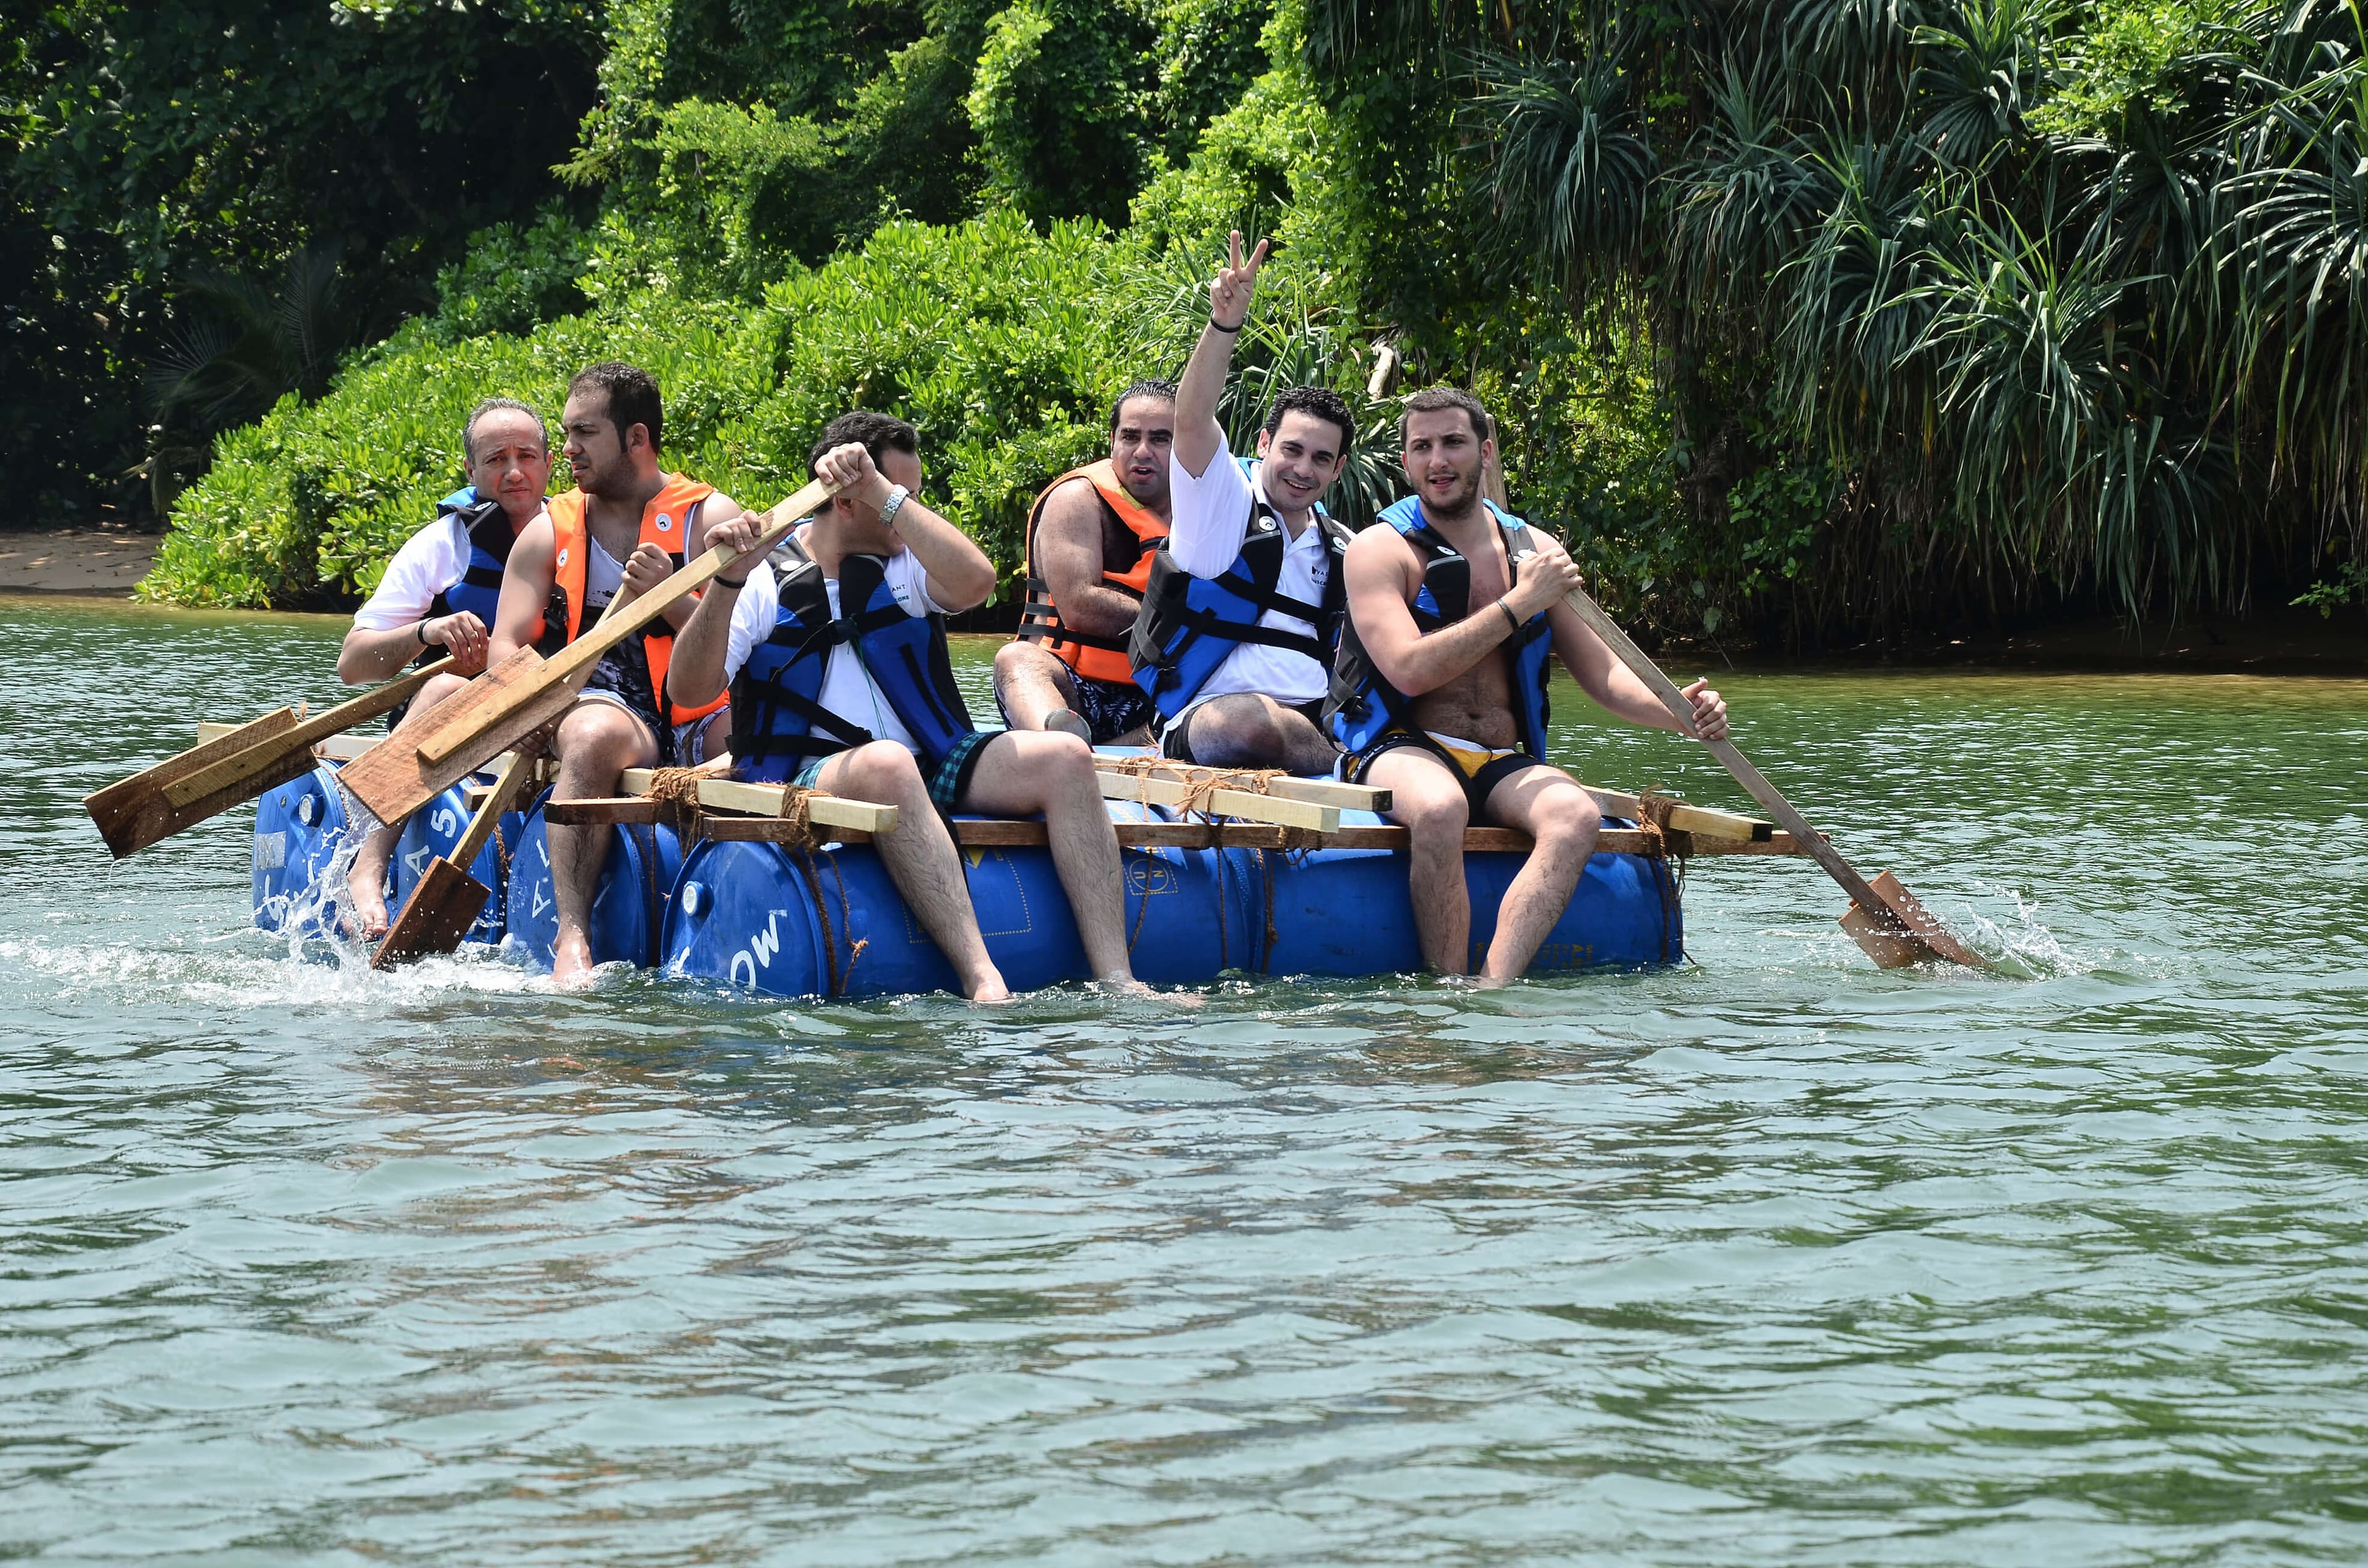 A team barrel boat ride on a take, Sri Lanka.